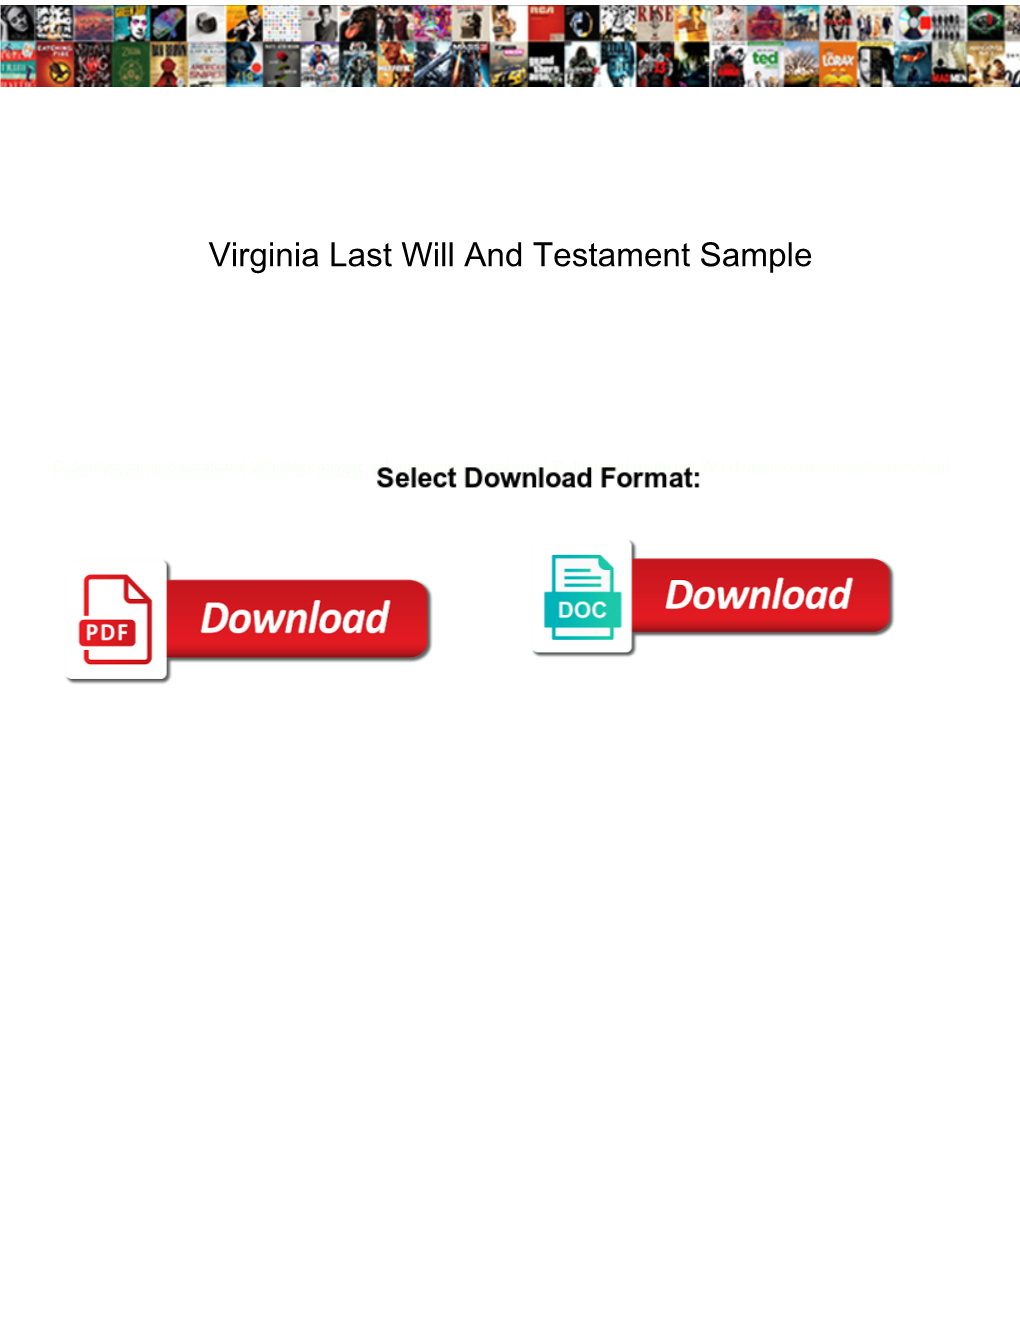 Virginia Last Will and Testament Sample